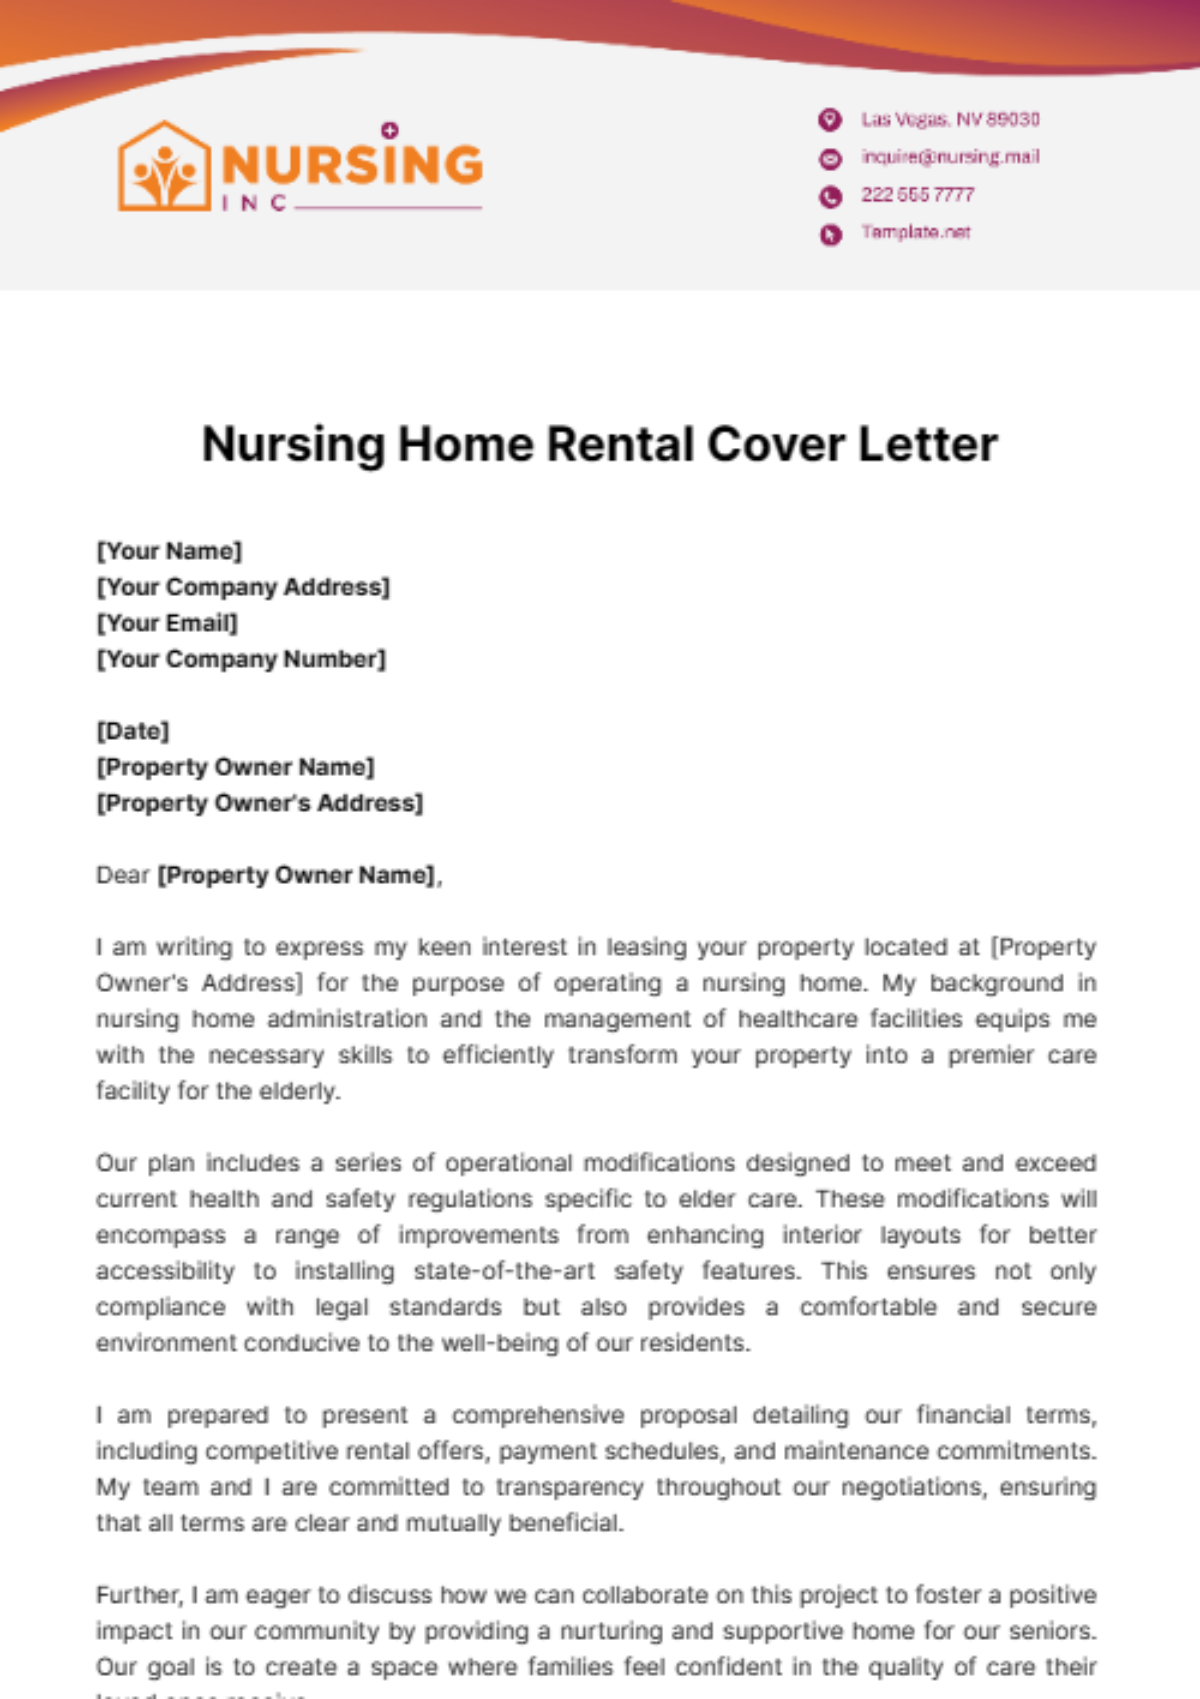 Nursing Home Rental Cover Letter Template